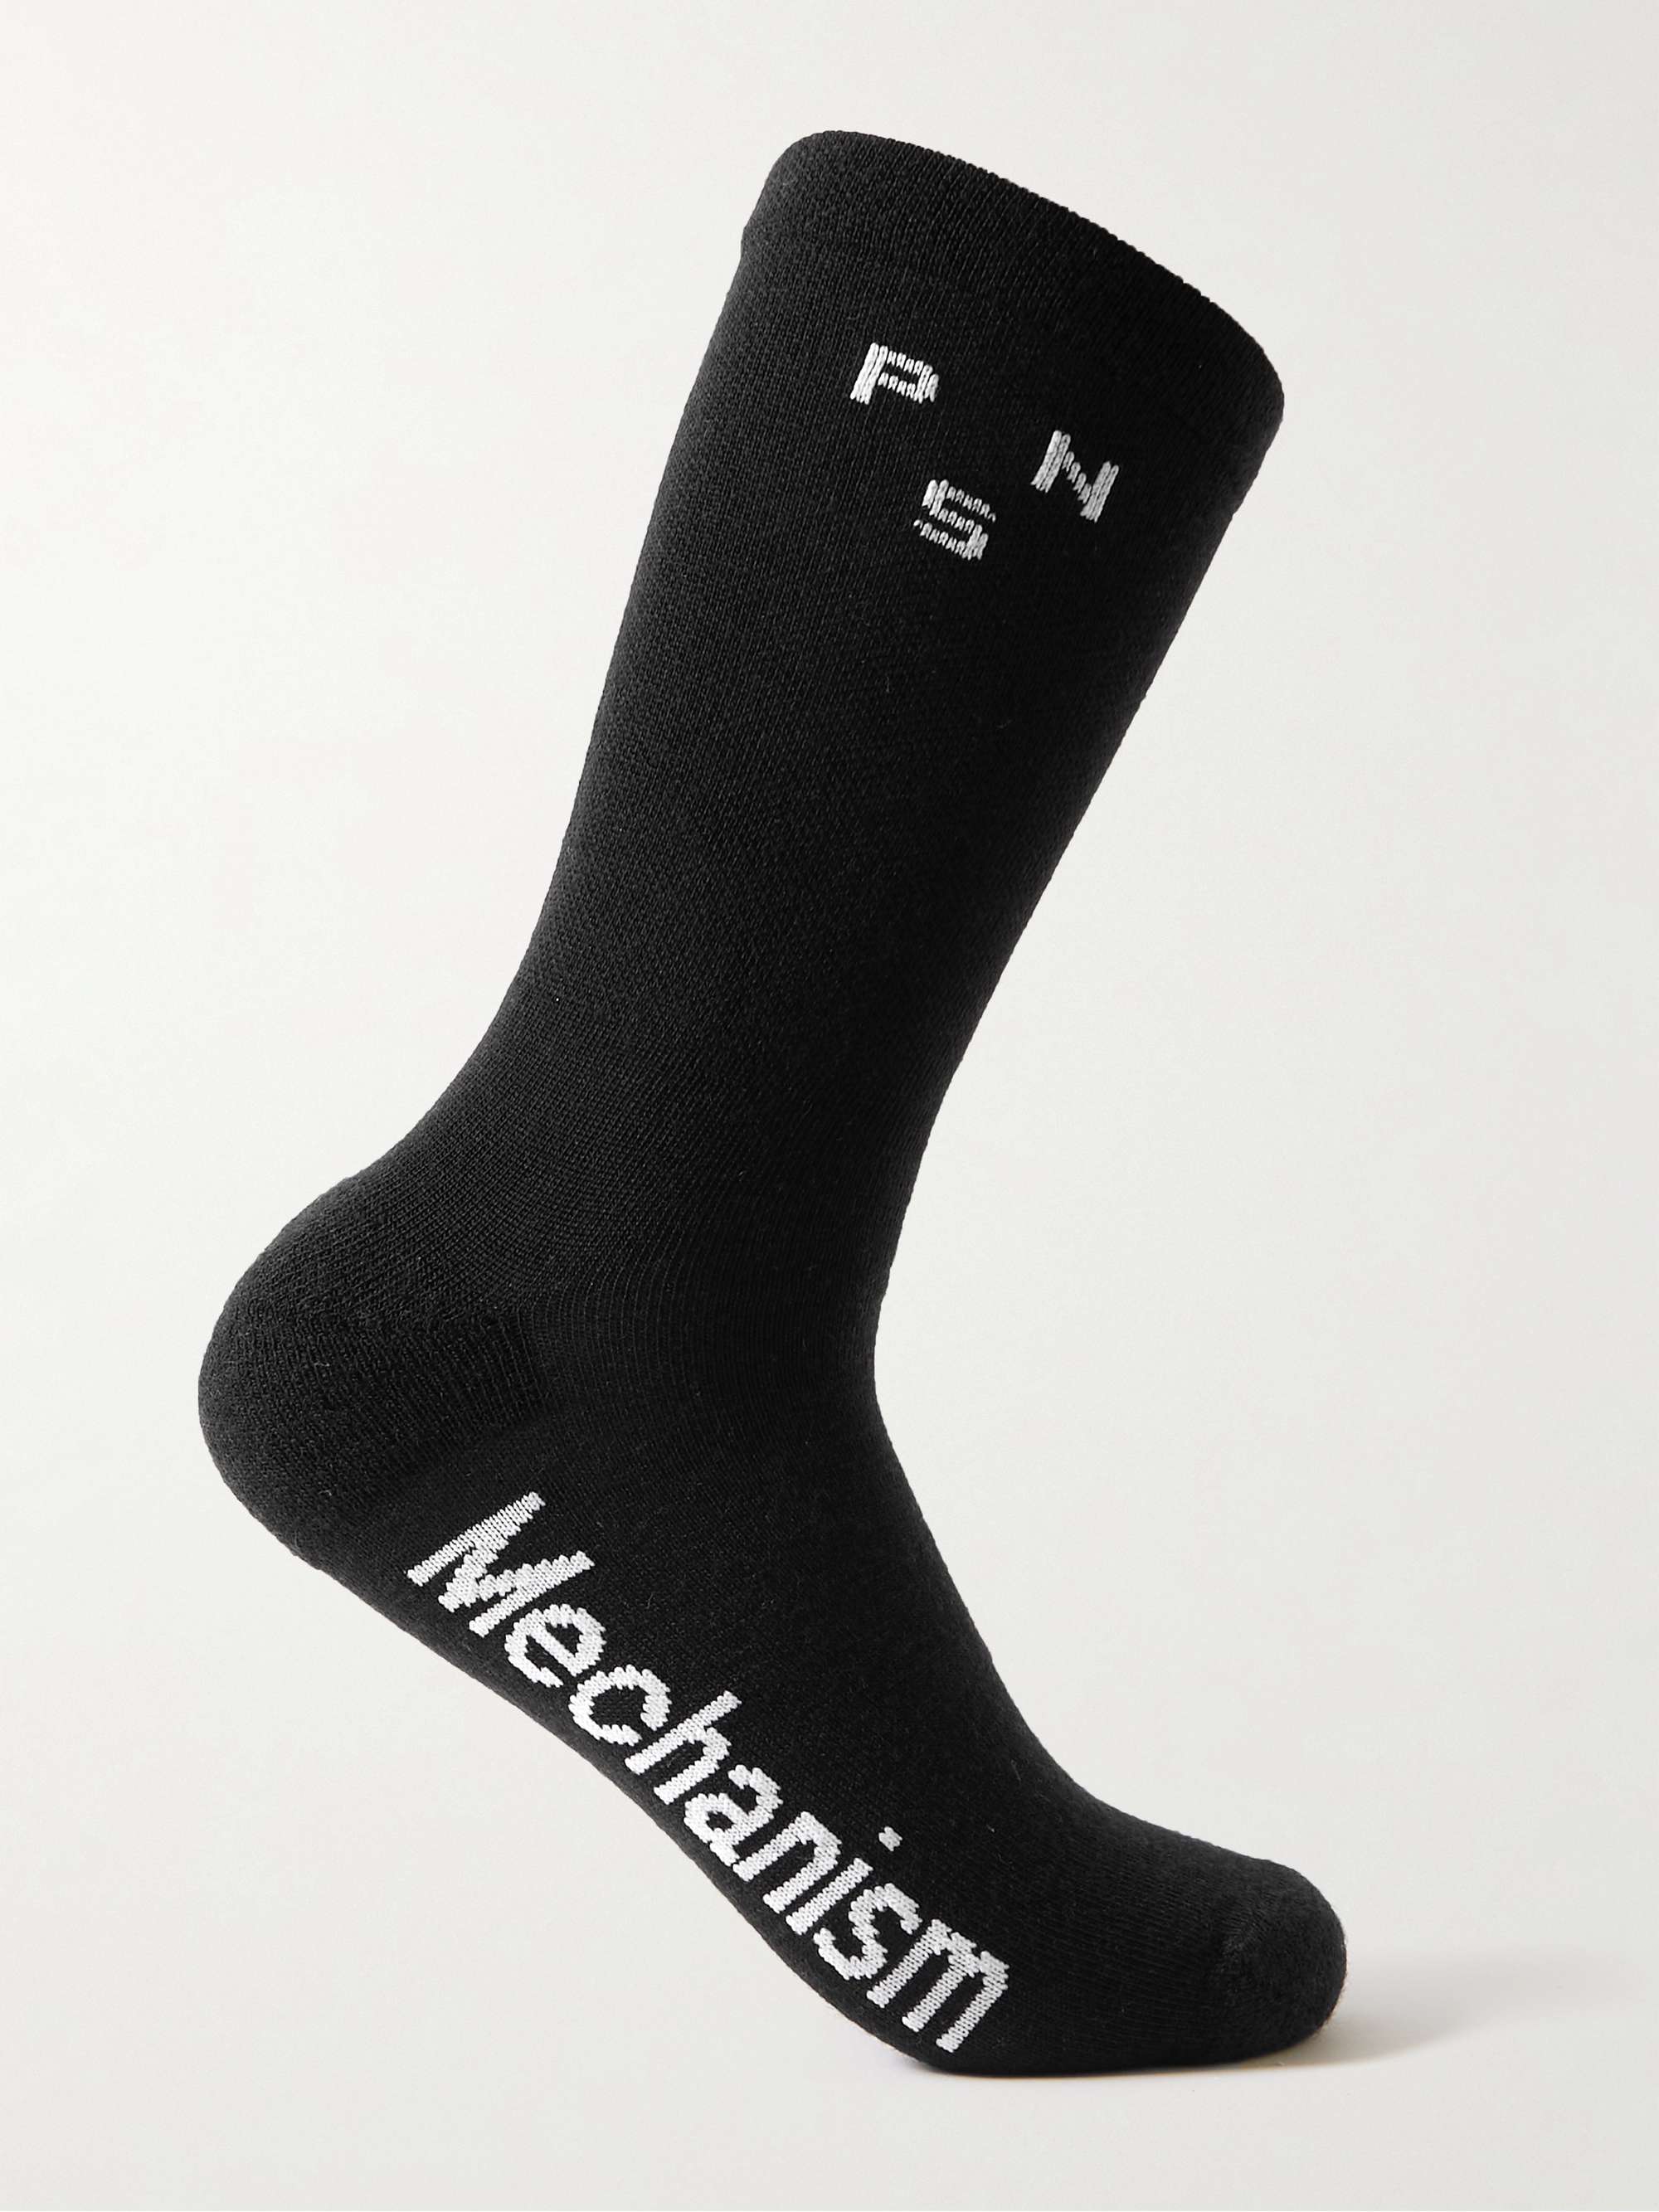 PAS NORMAL STUDIOS Mechanism Thermal Merino Wool-Blend Cycling Socks for Men